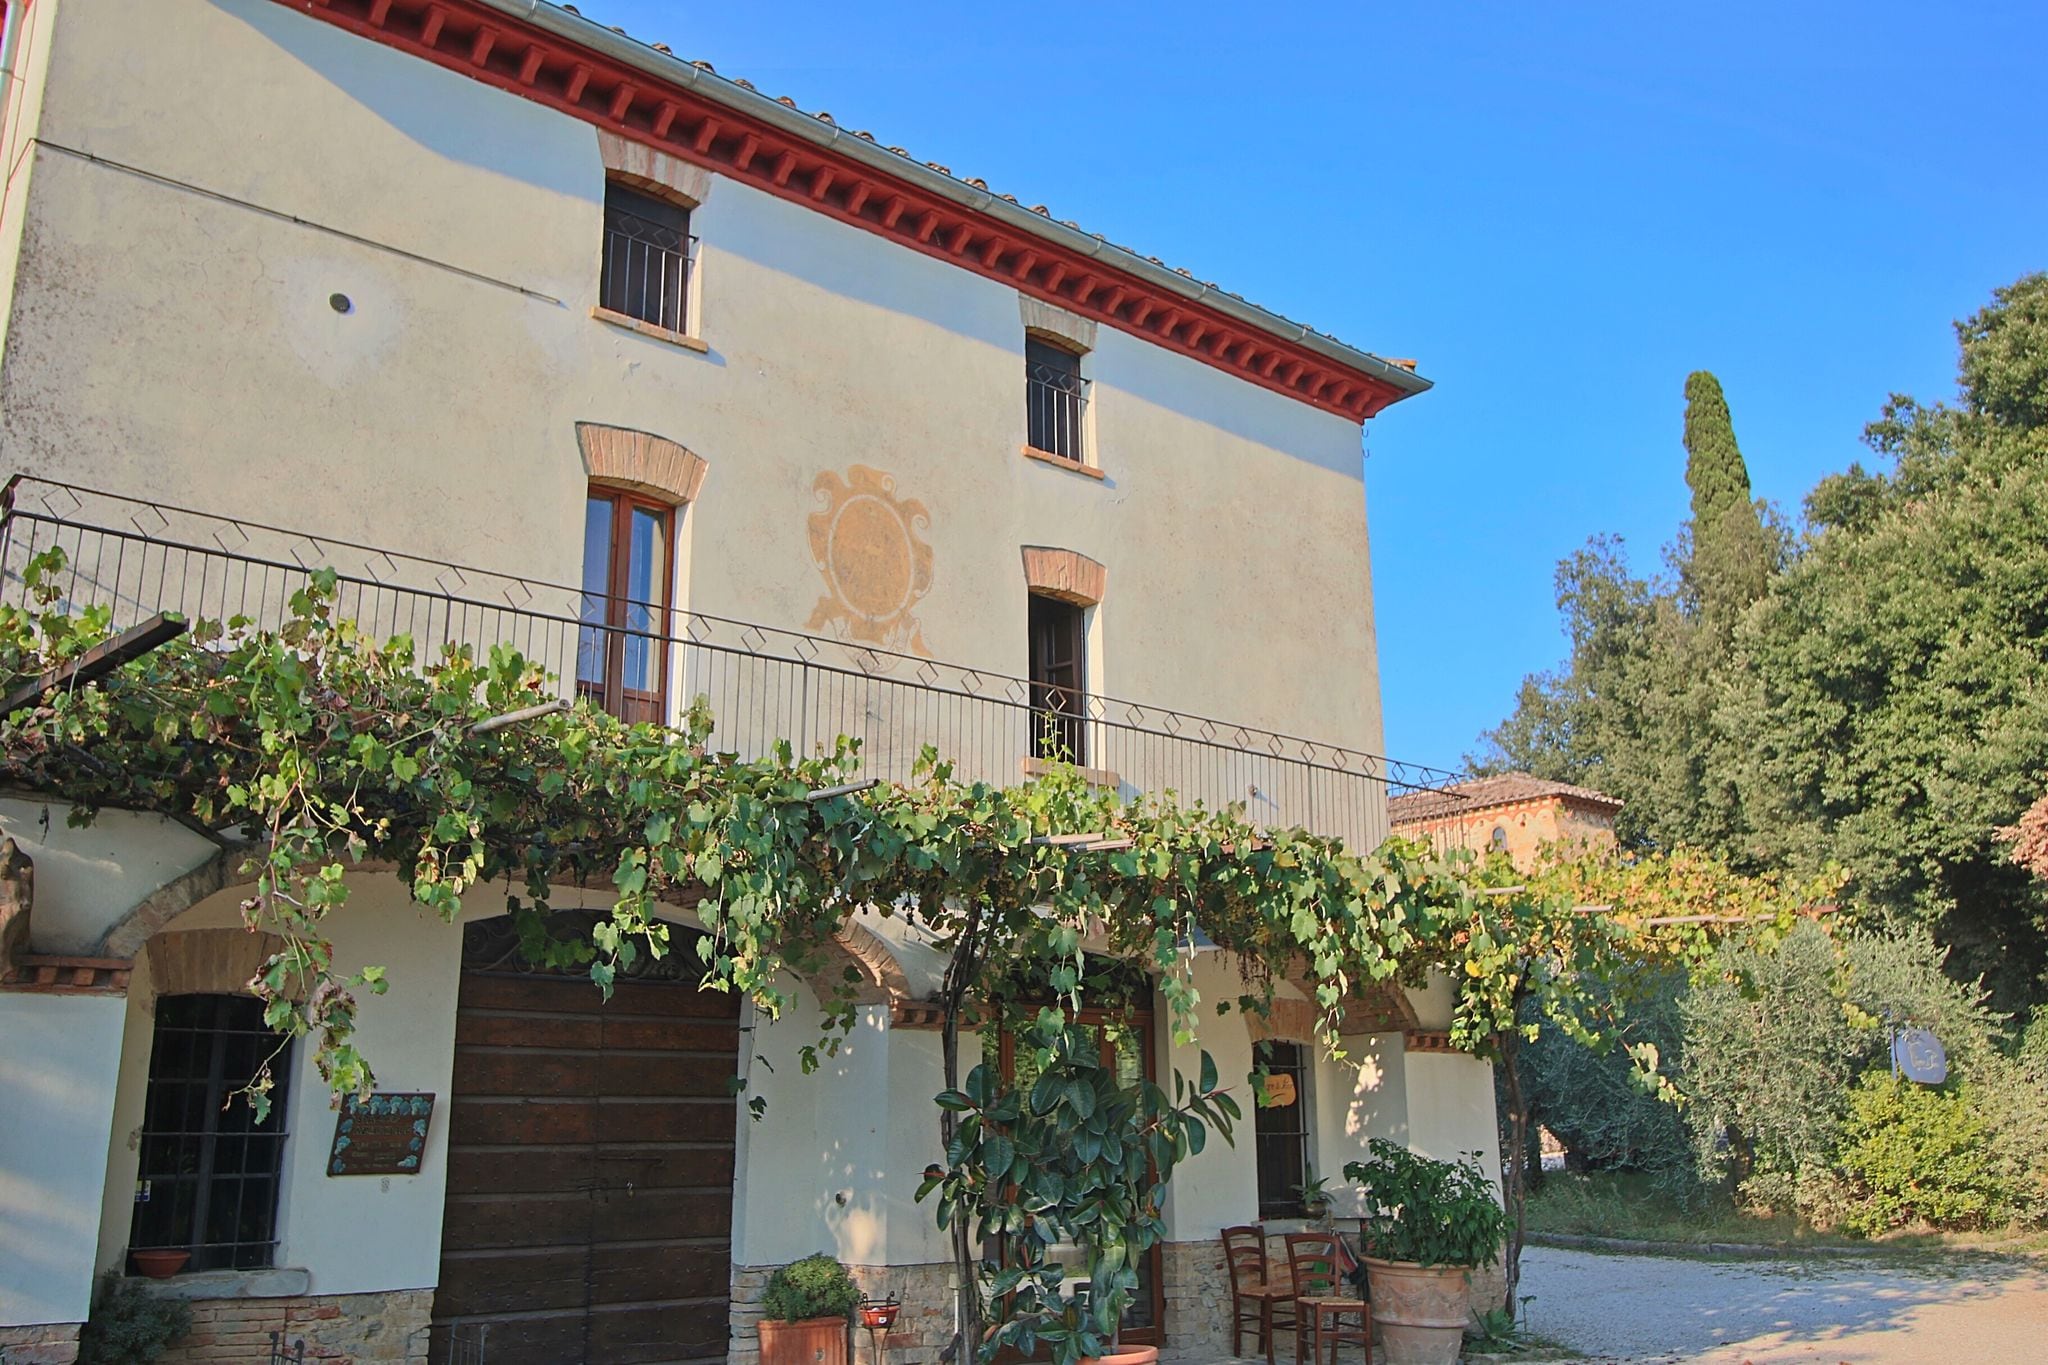 Attractive apartment in a traditional farmhouse on the estate near Perugia